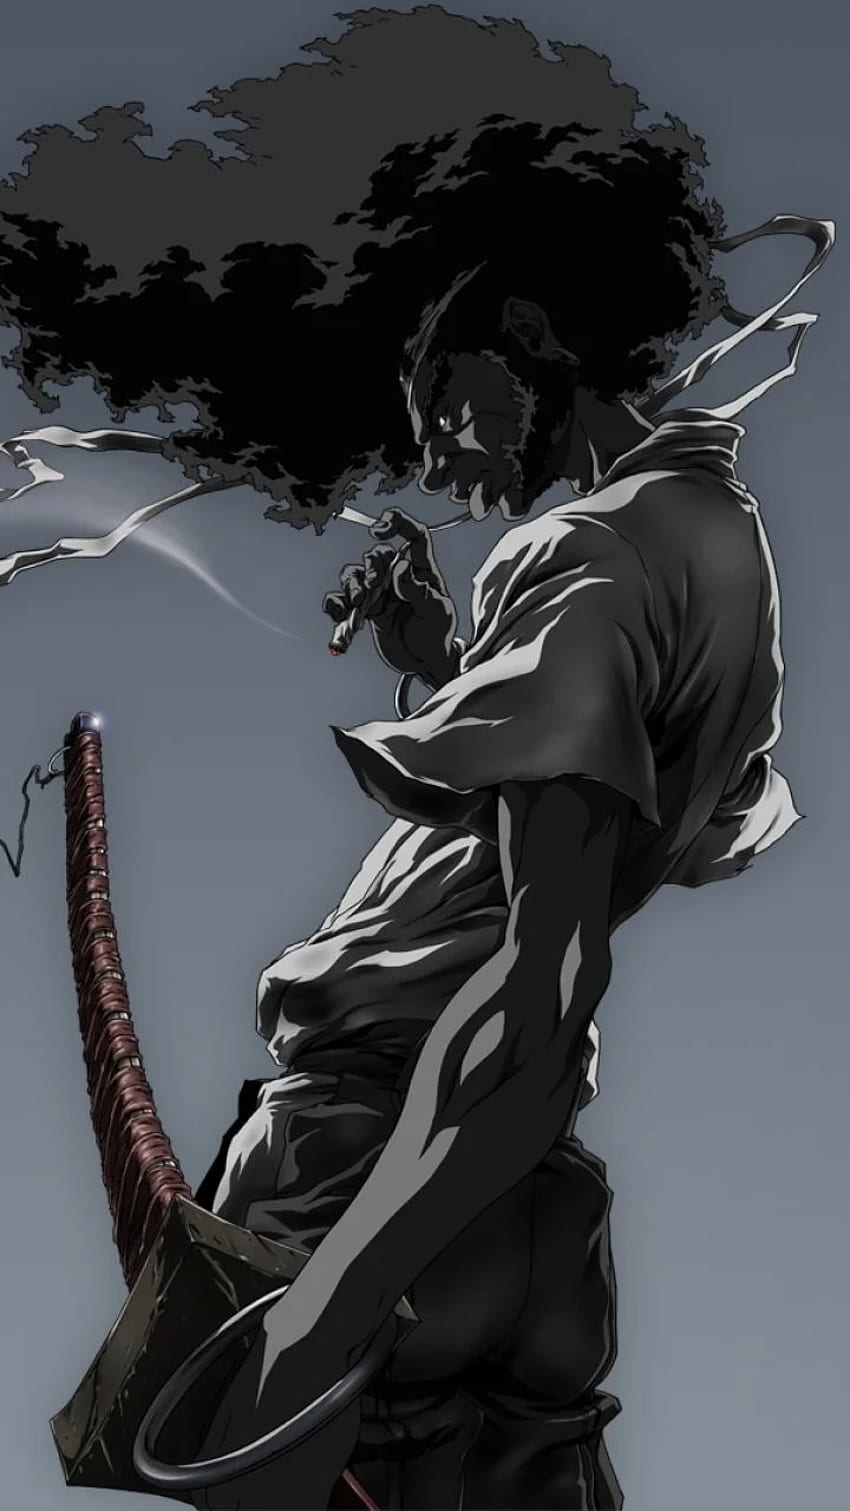 Samurai and Dragon Anime {1284x2778} by a.i. : r/iWallpaper